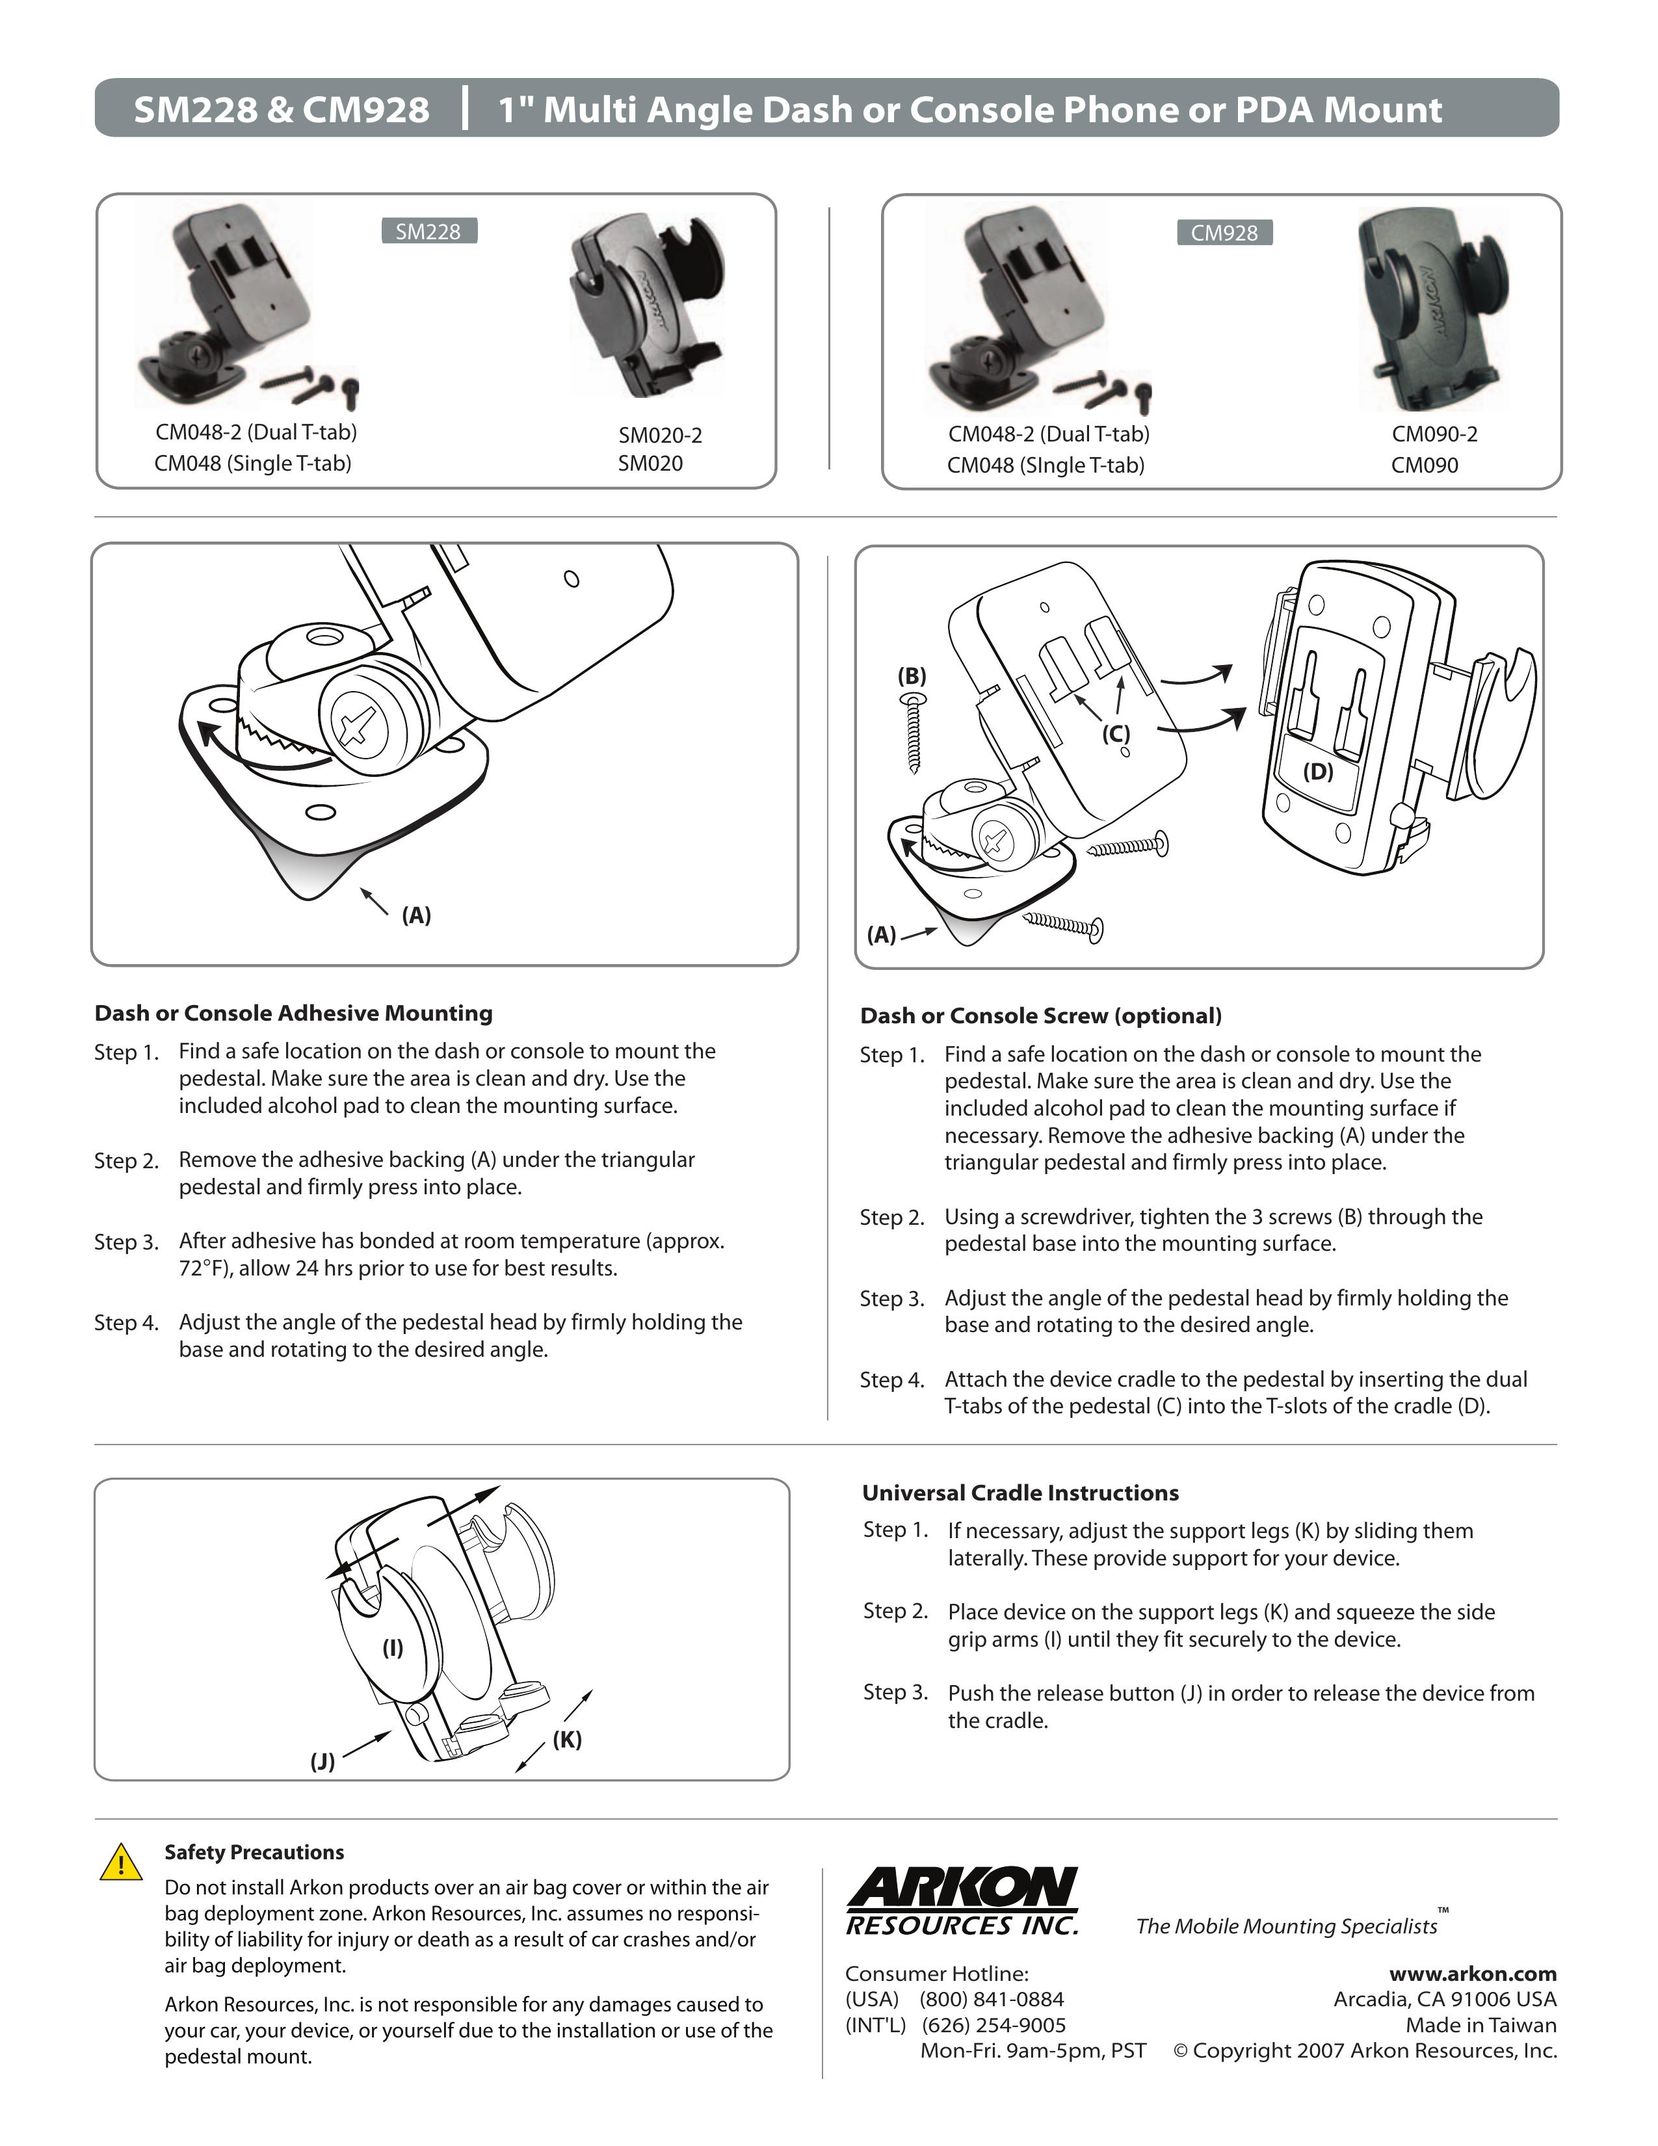 Arkon CM928 Cell Phone Accessories User Manual